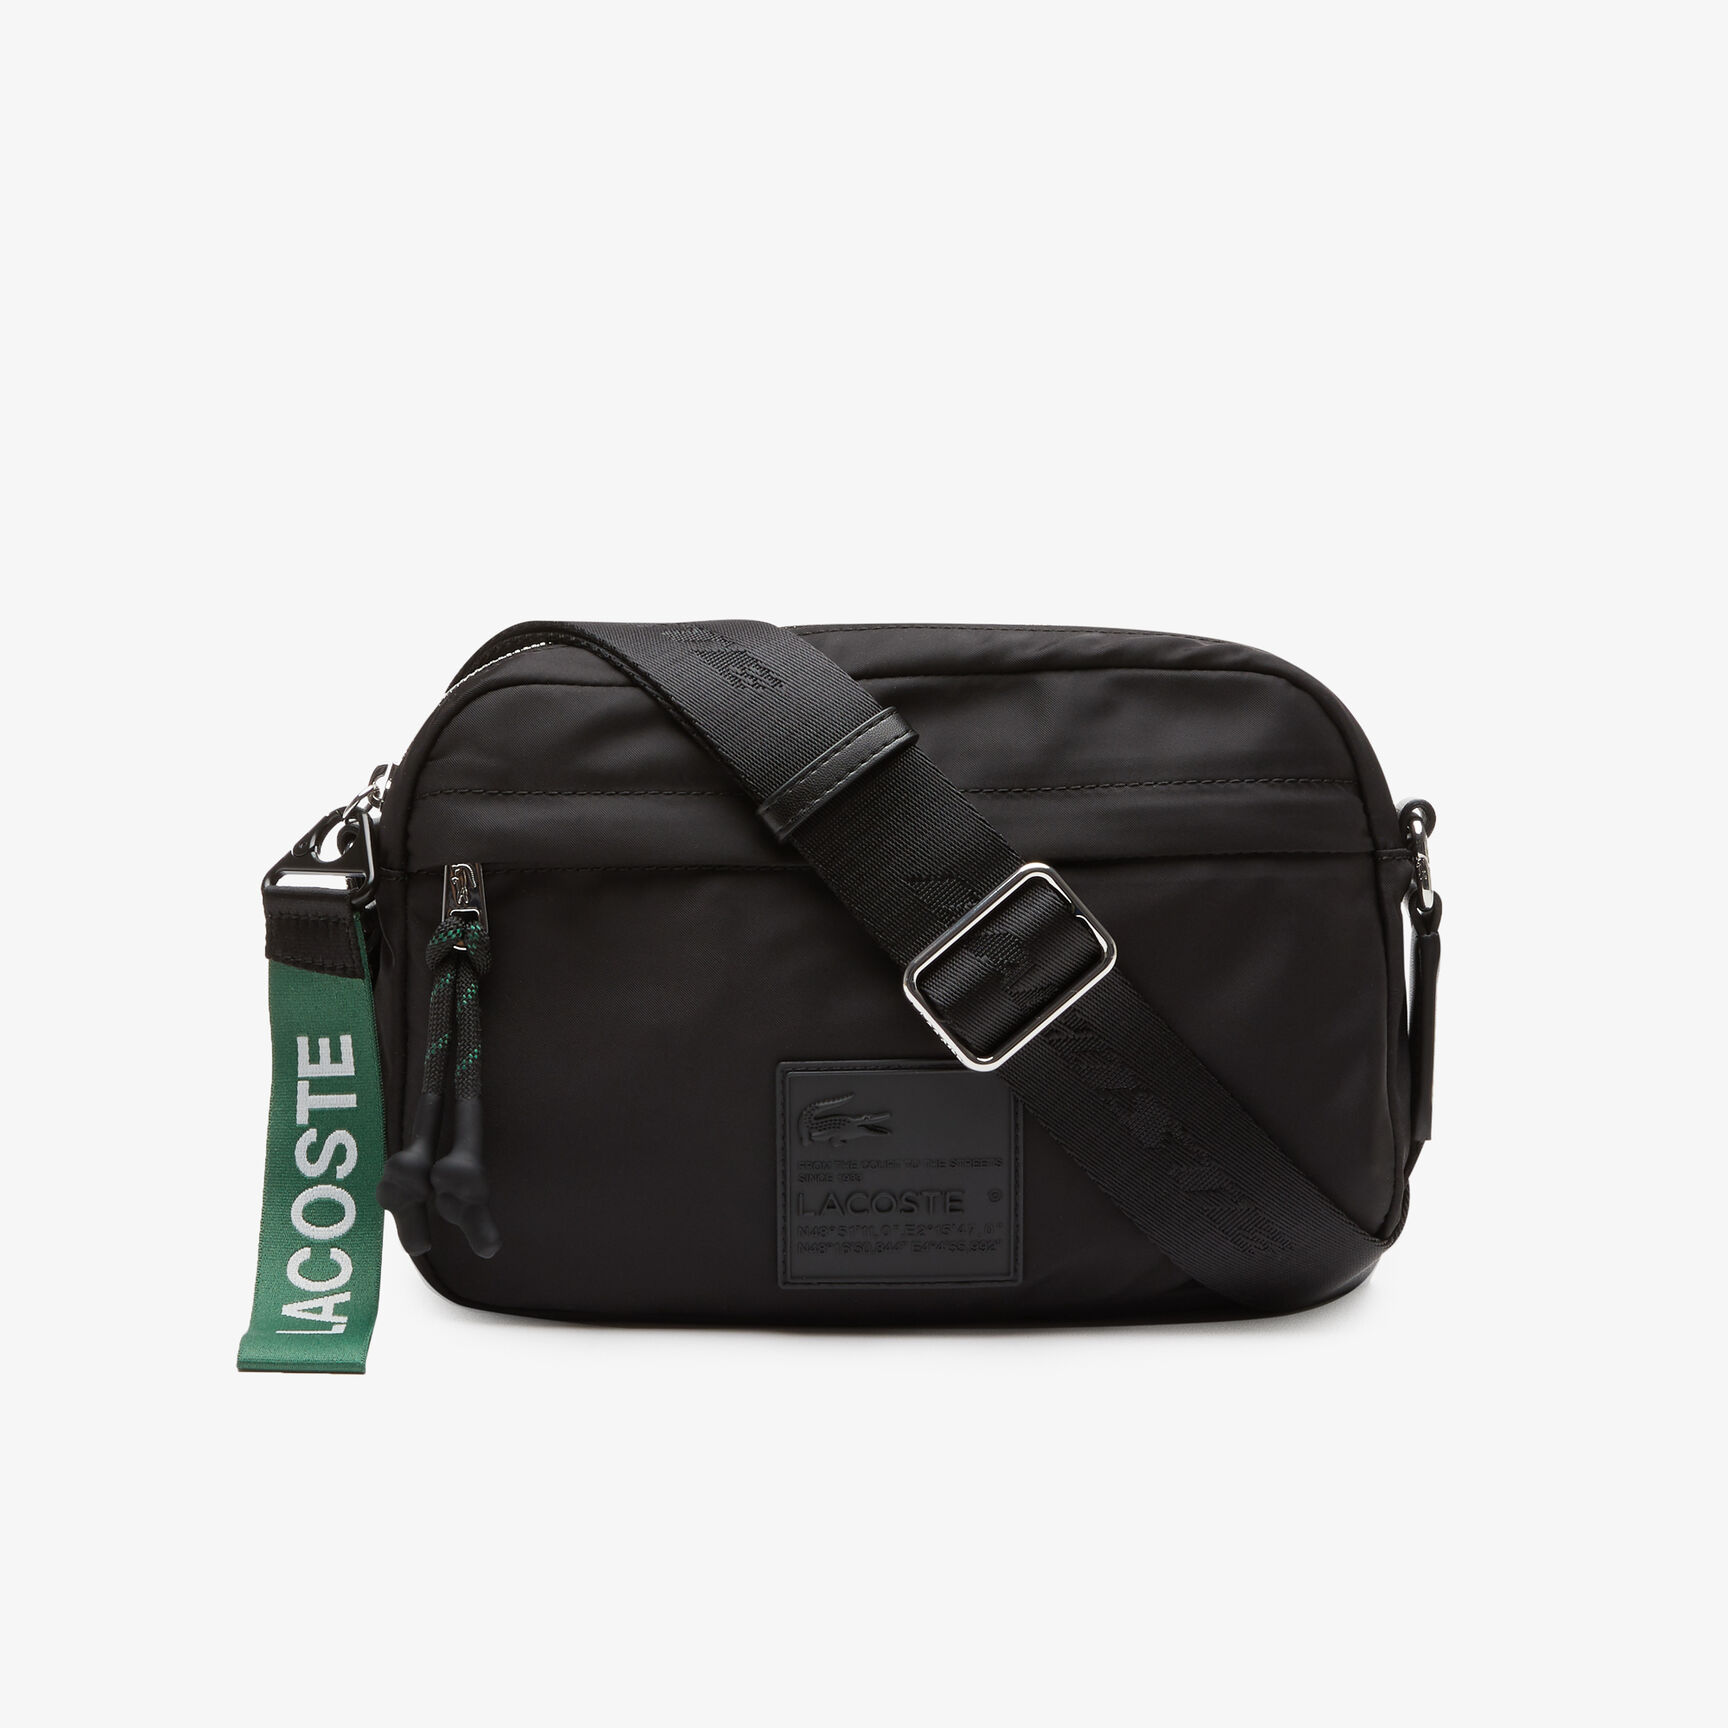 Lacoste Vertical Crossover Bag (Marine 166) Handbags - ShopStyle